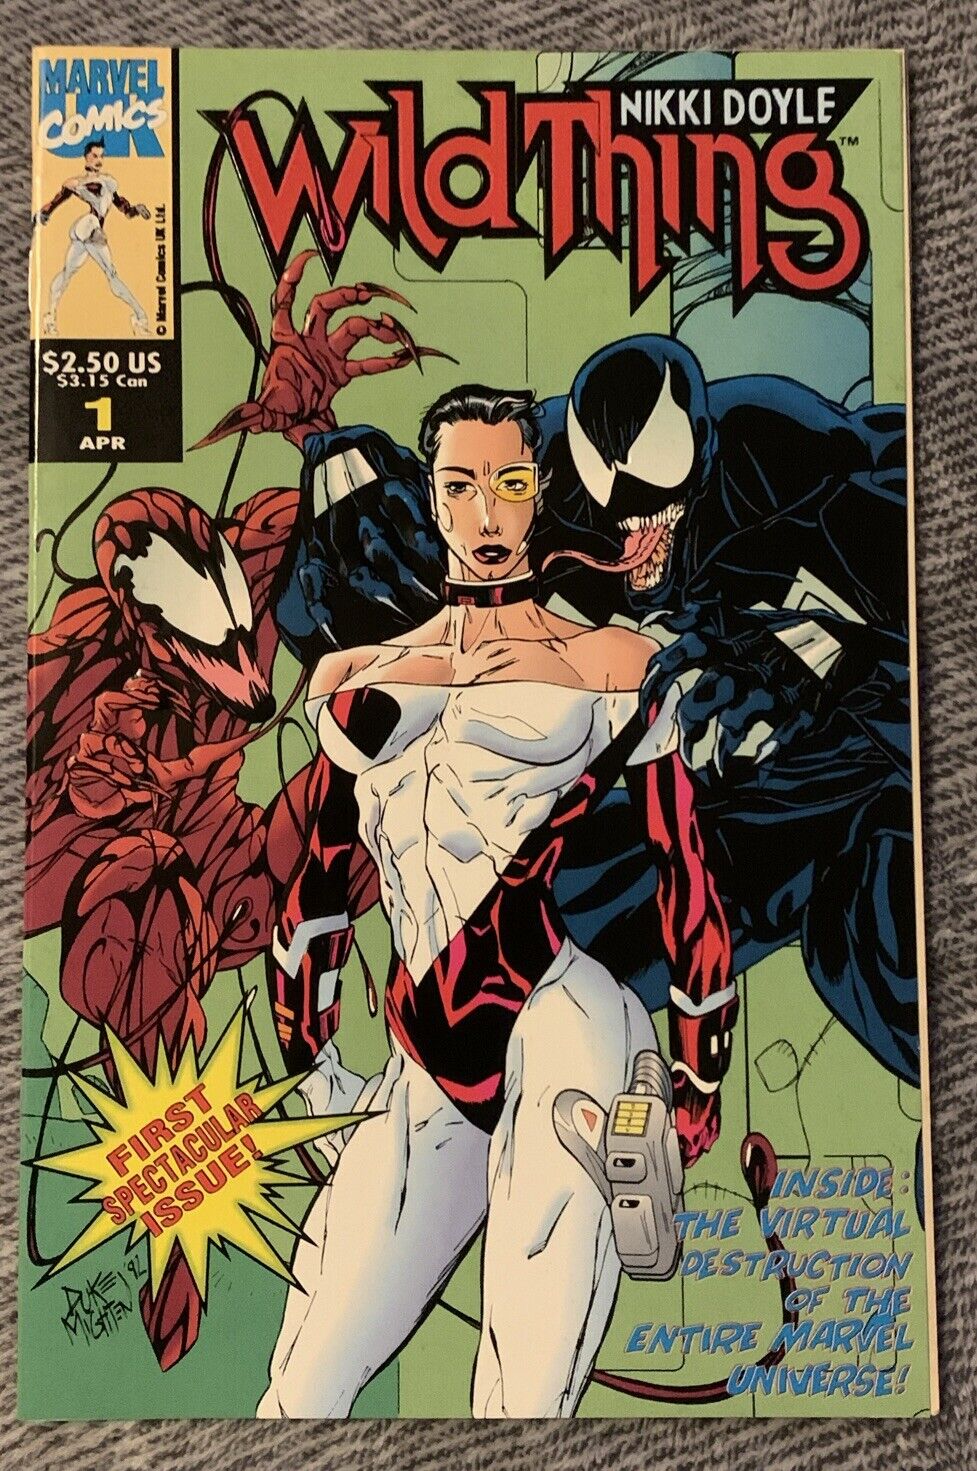 Wild Thing #1 (Marvel Comics, 1992) Venom, Carnage Cover VF+